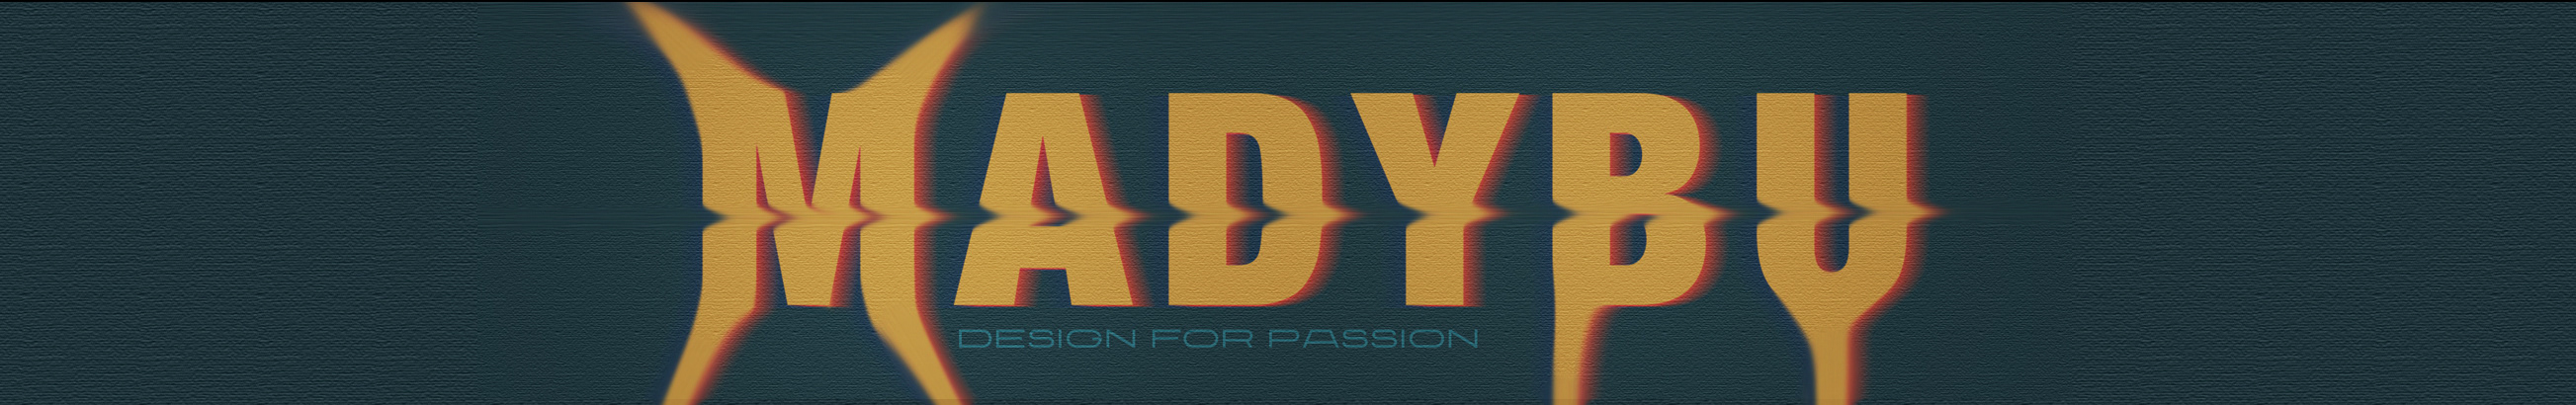 Mady Bu's profile banner